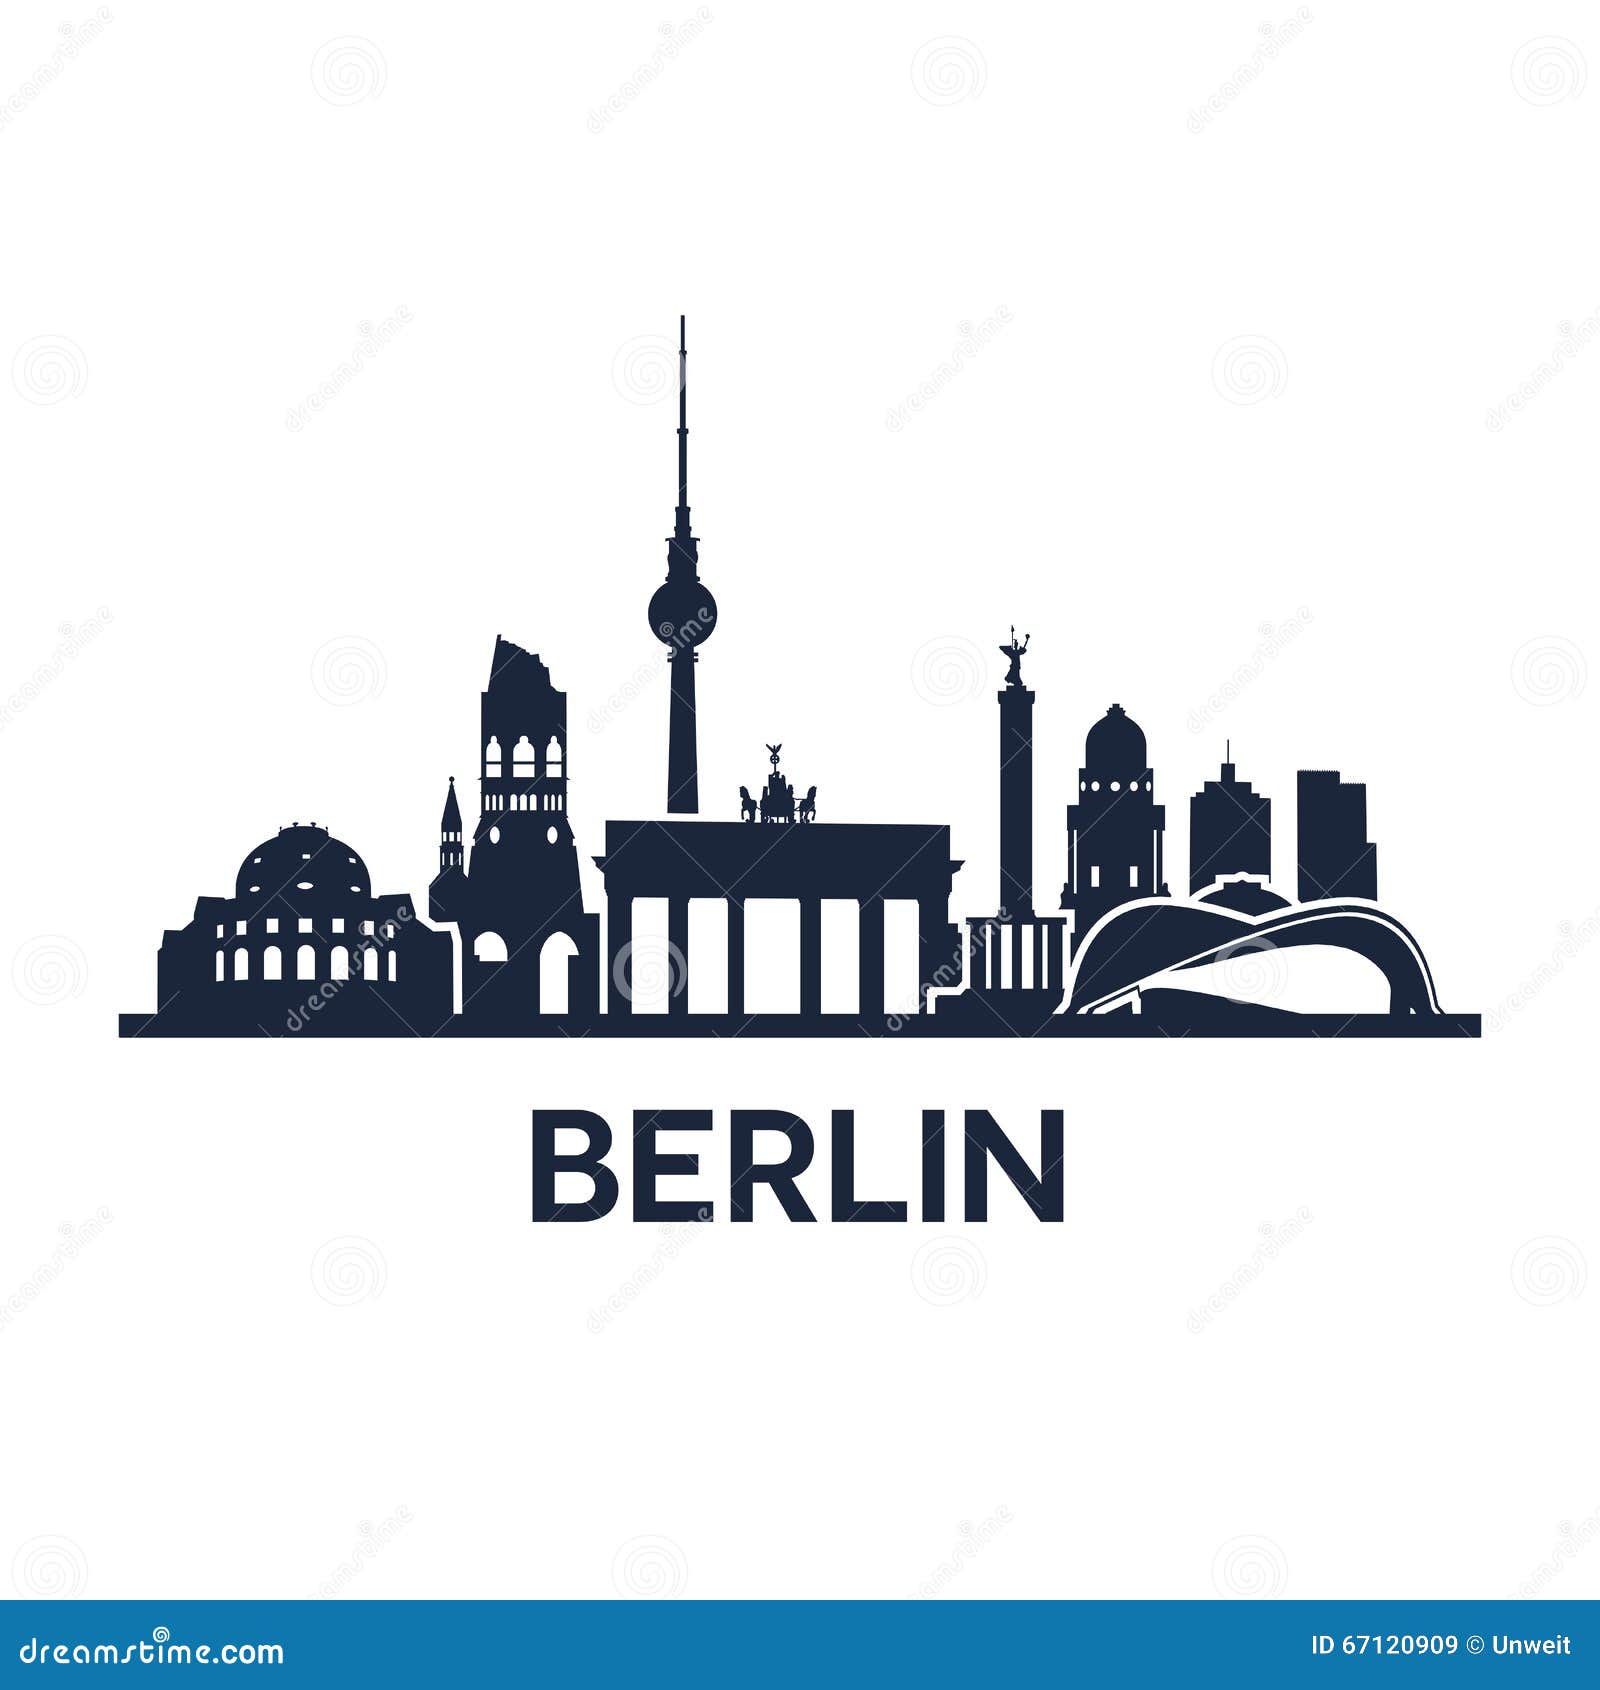 berlin city skyline